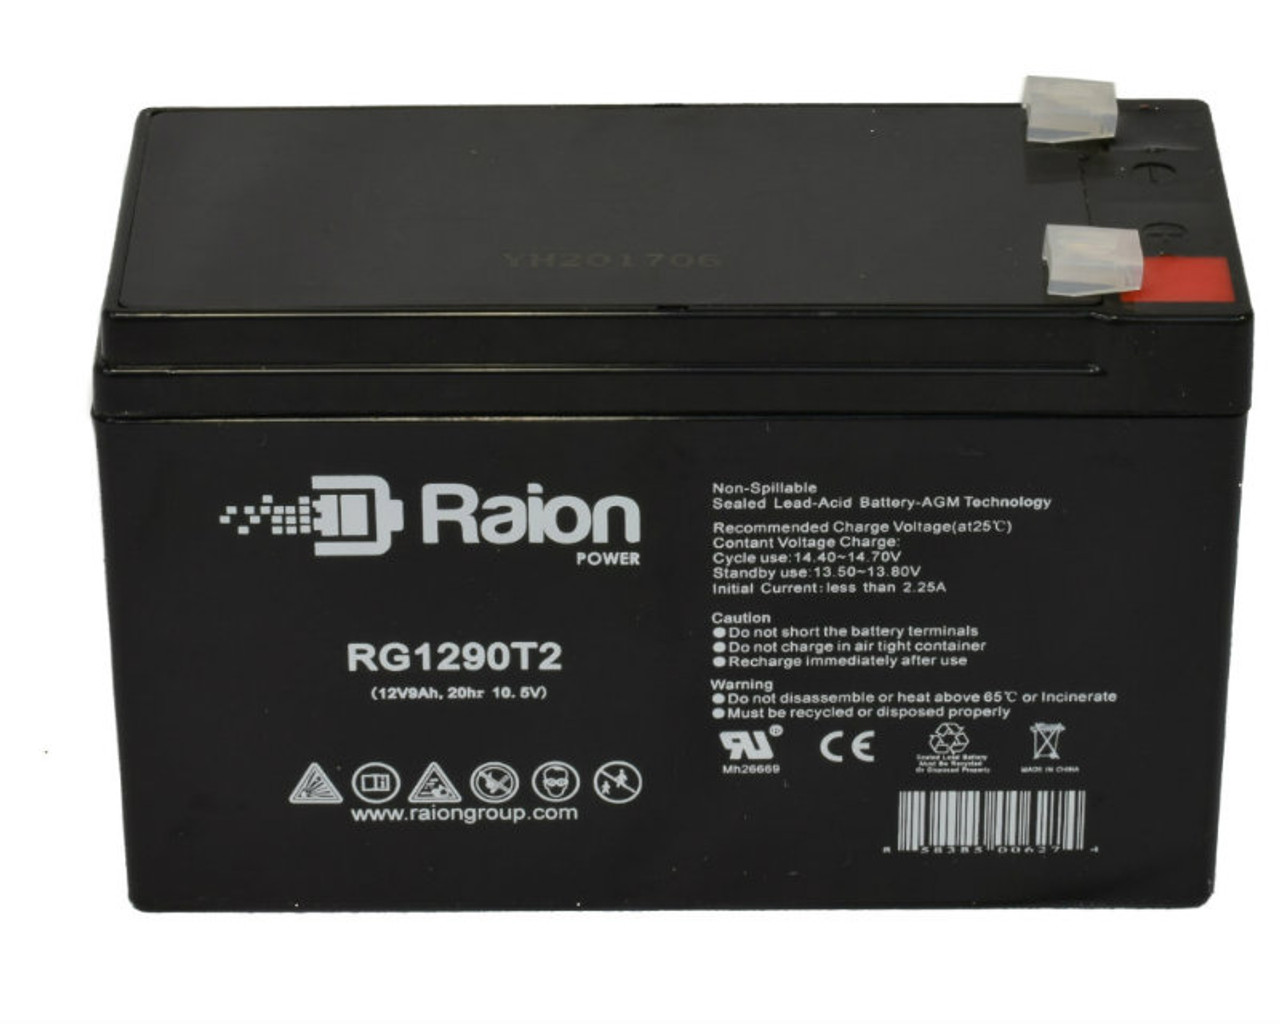 Raion Power RG1290T2 12V 9Ah Lead Acid Battery for Exell EB1290F2